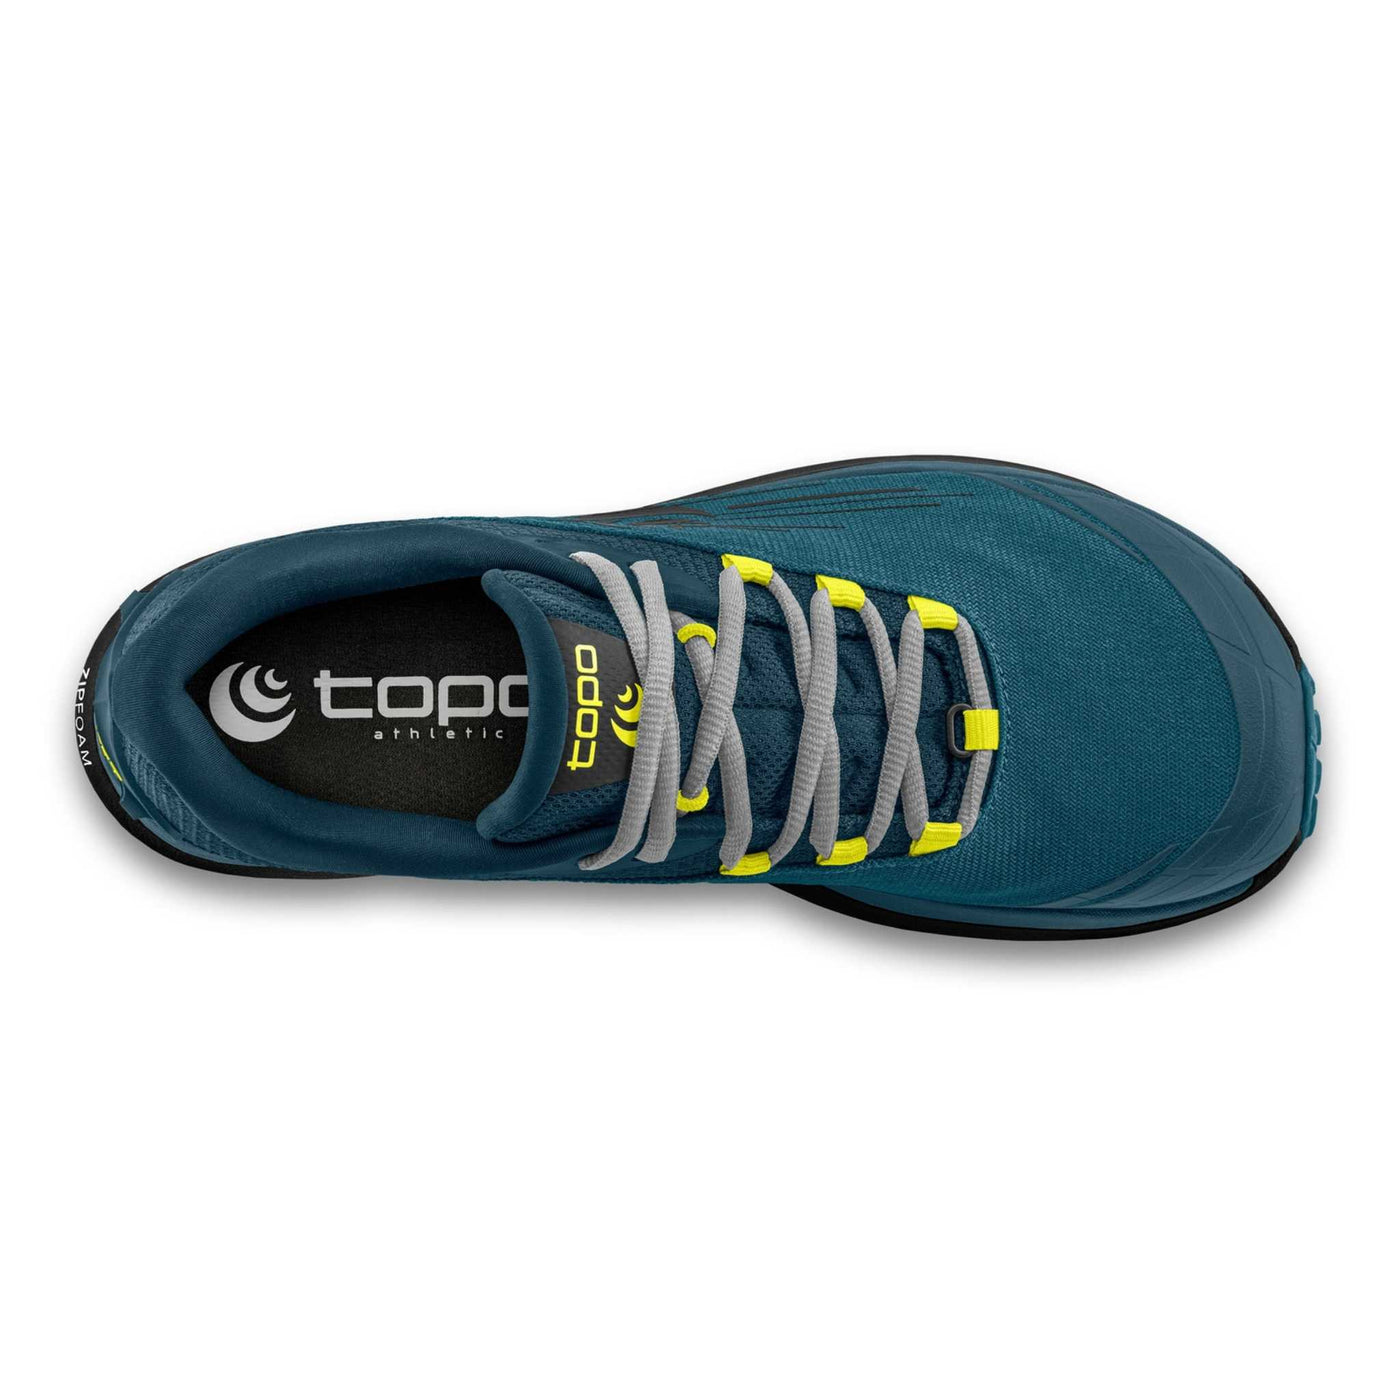 Topo Pursuit - Mens | Men's Trail Running Shoes NZ | Further Faster Christchurch NZ #blue-navy